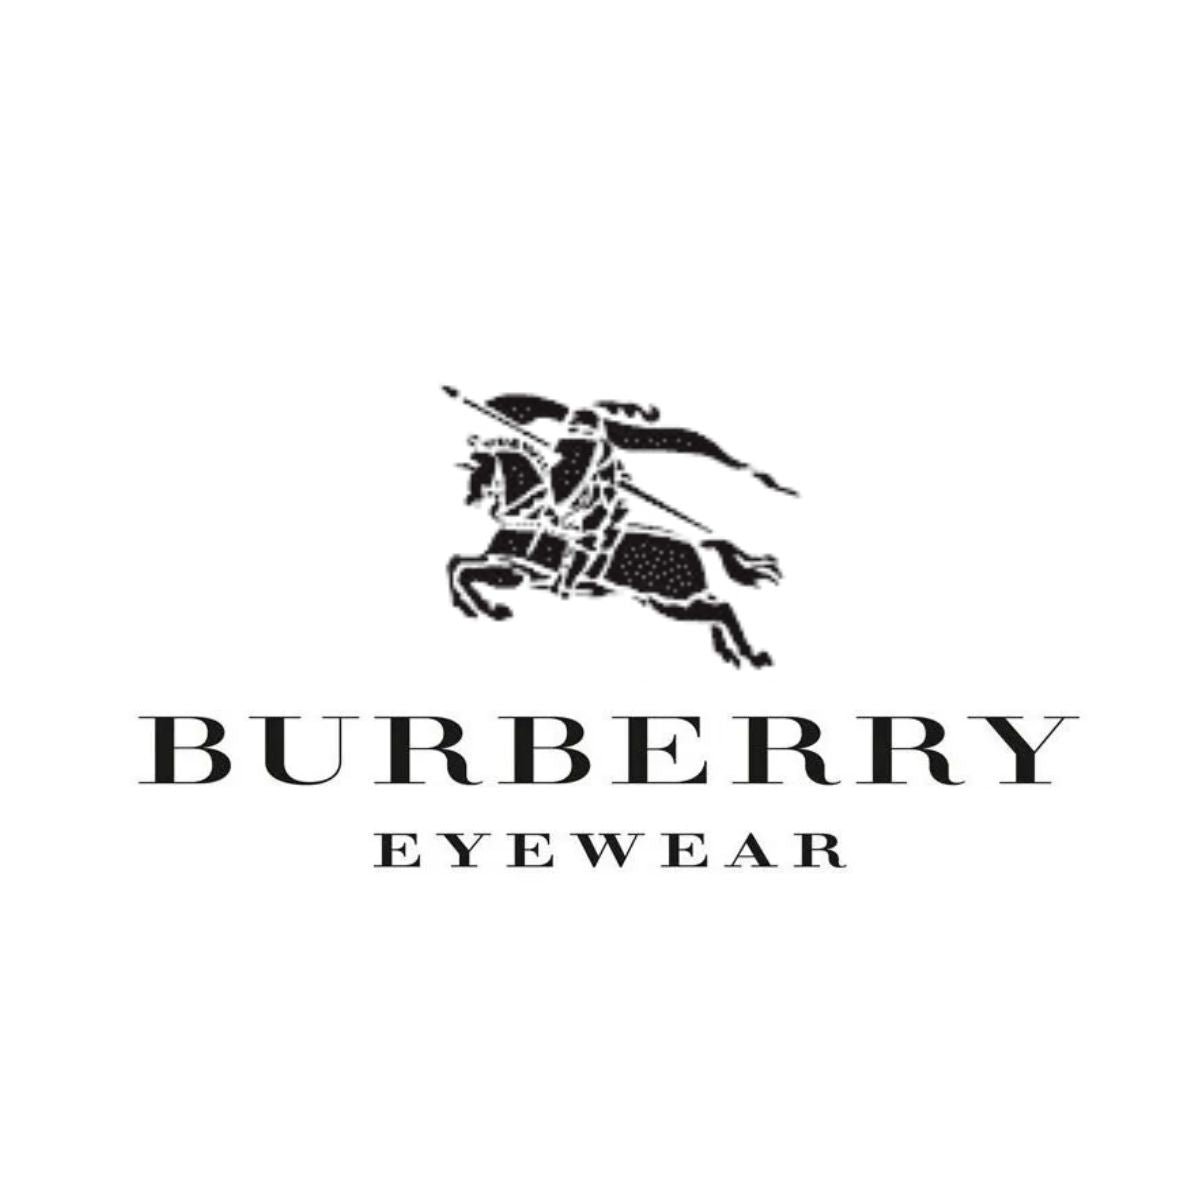 "Burberry premium eyewear brands sunglasses, spectacles, optical frames lenses at optorium"